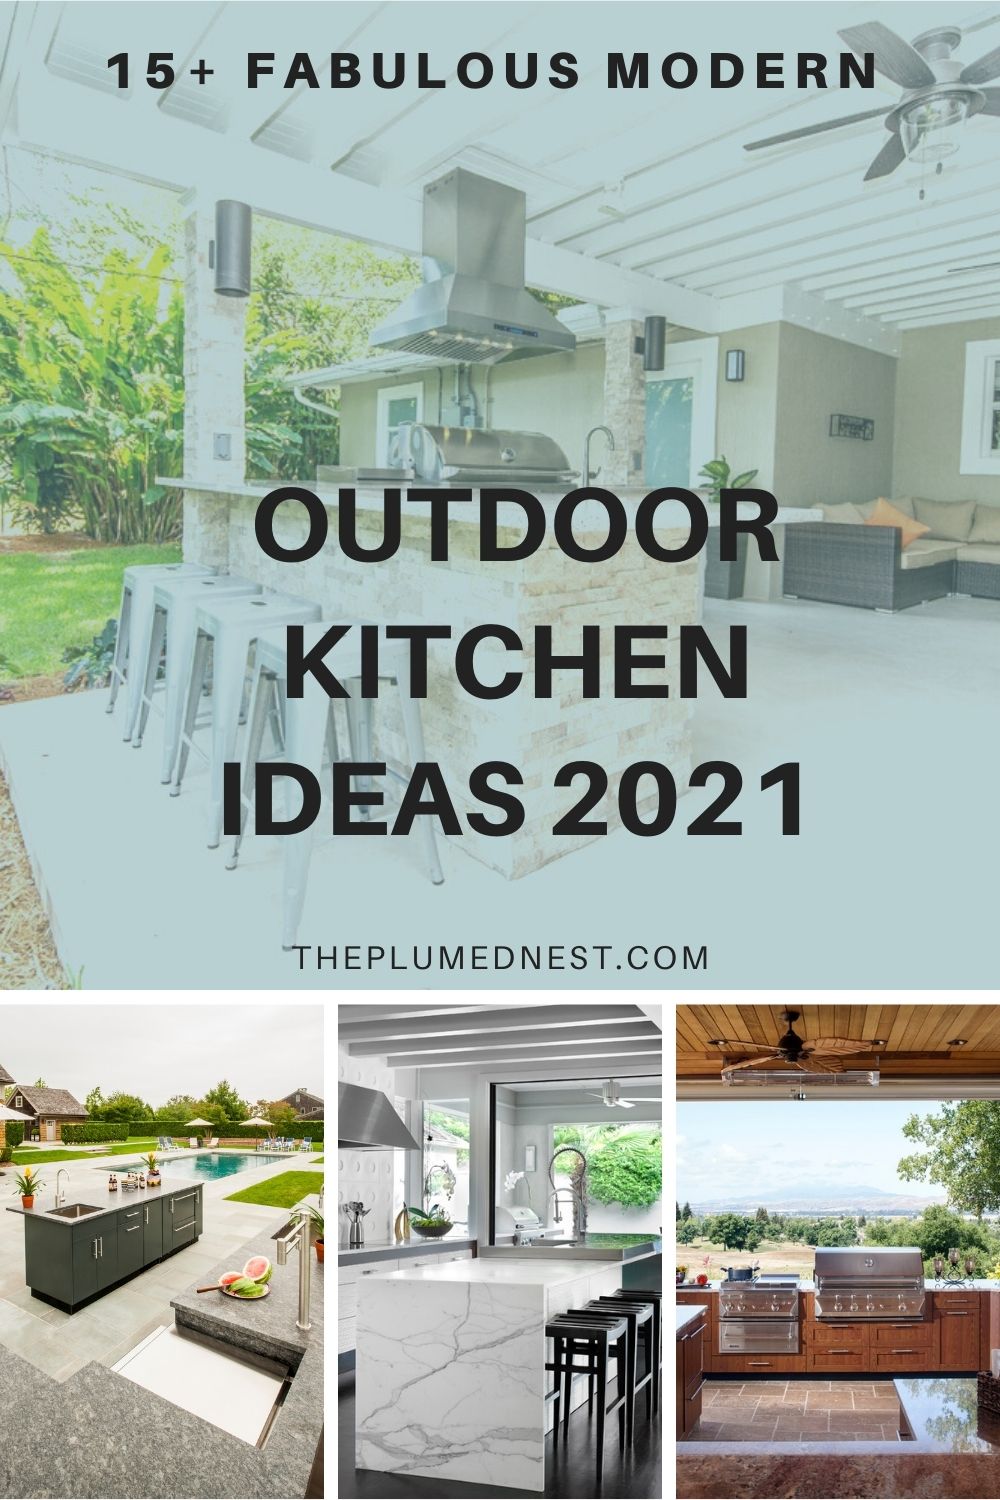 15 Fabulous Modern Outdoor Kitchen Ideas 2021 The Plumed Nest